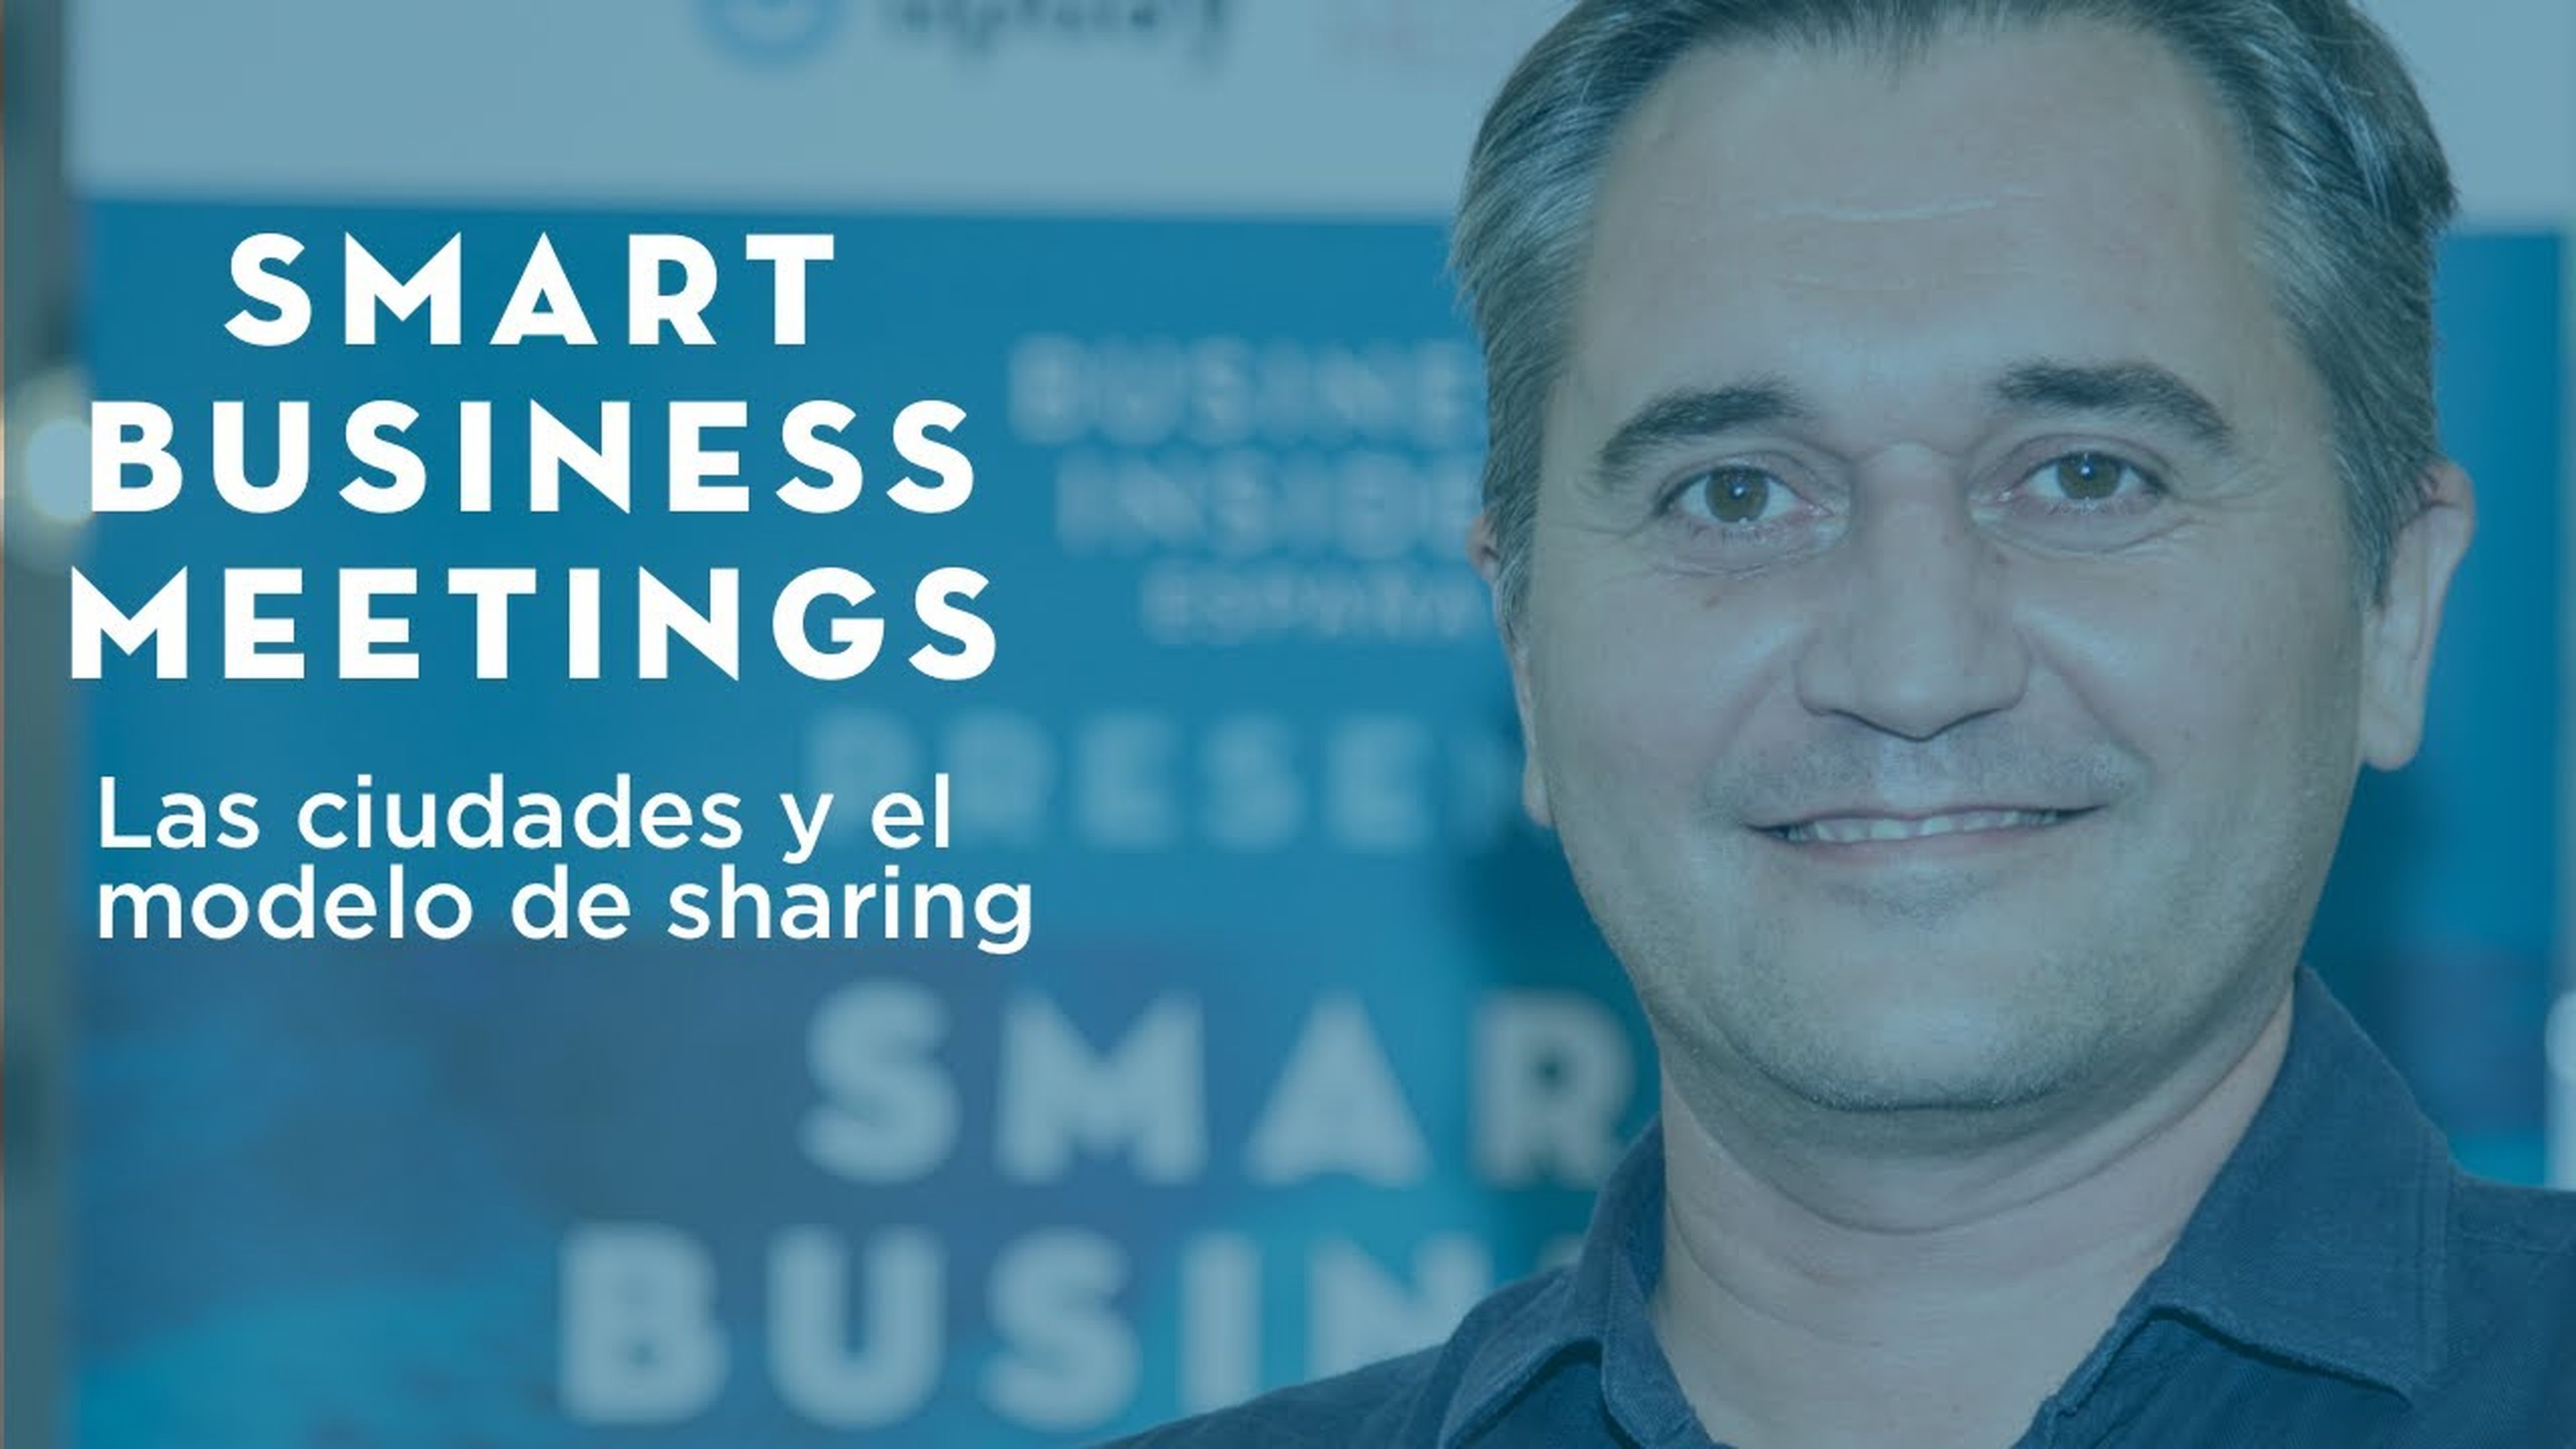 Modelos de sharing en las ciudades | IX SMART BUSINESS MEETING